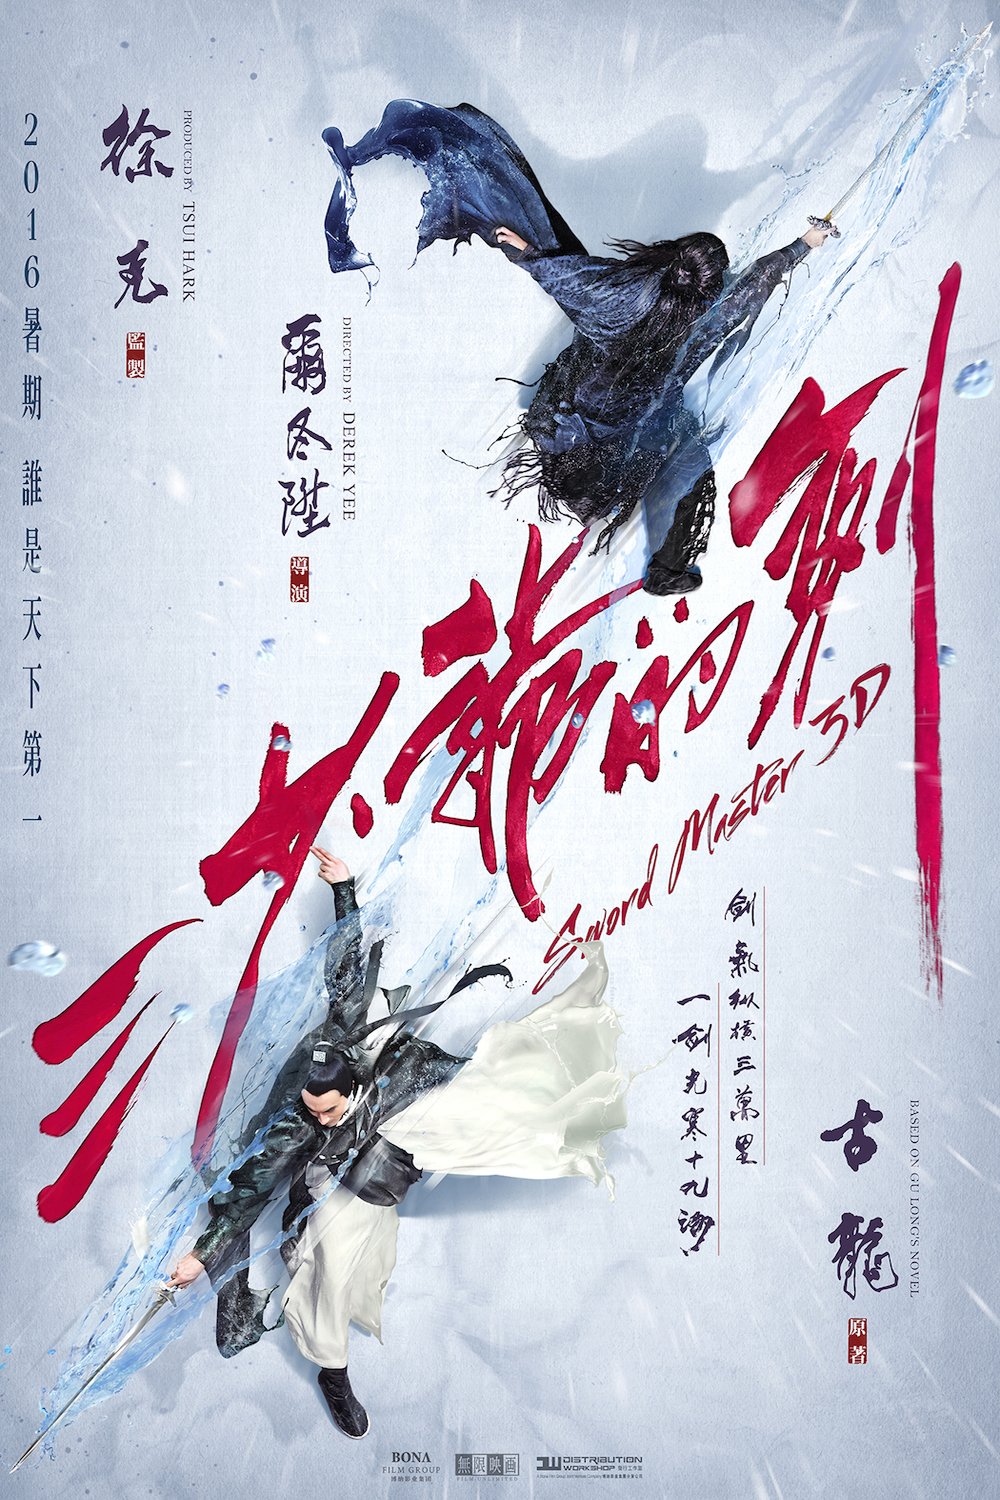 Mandarin poster of the movie Sword Master